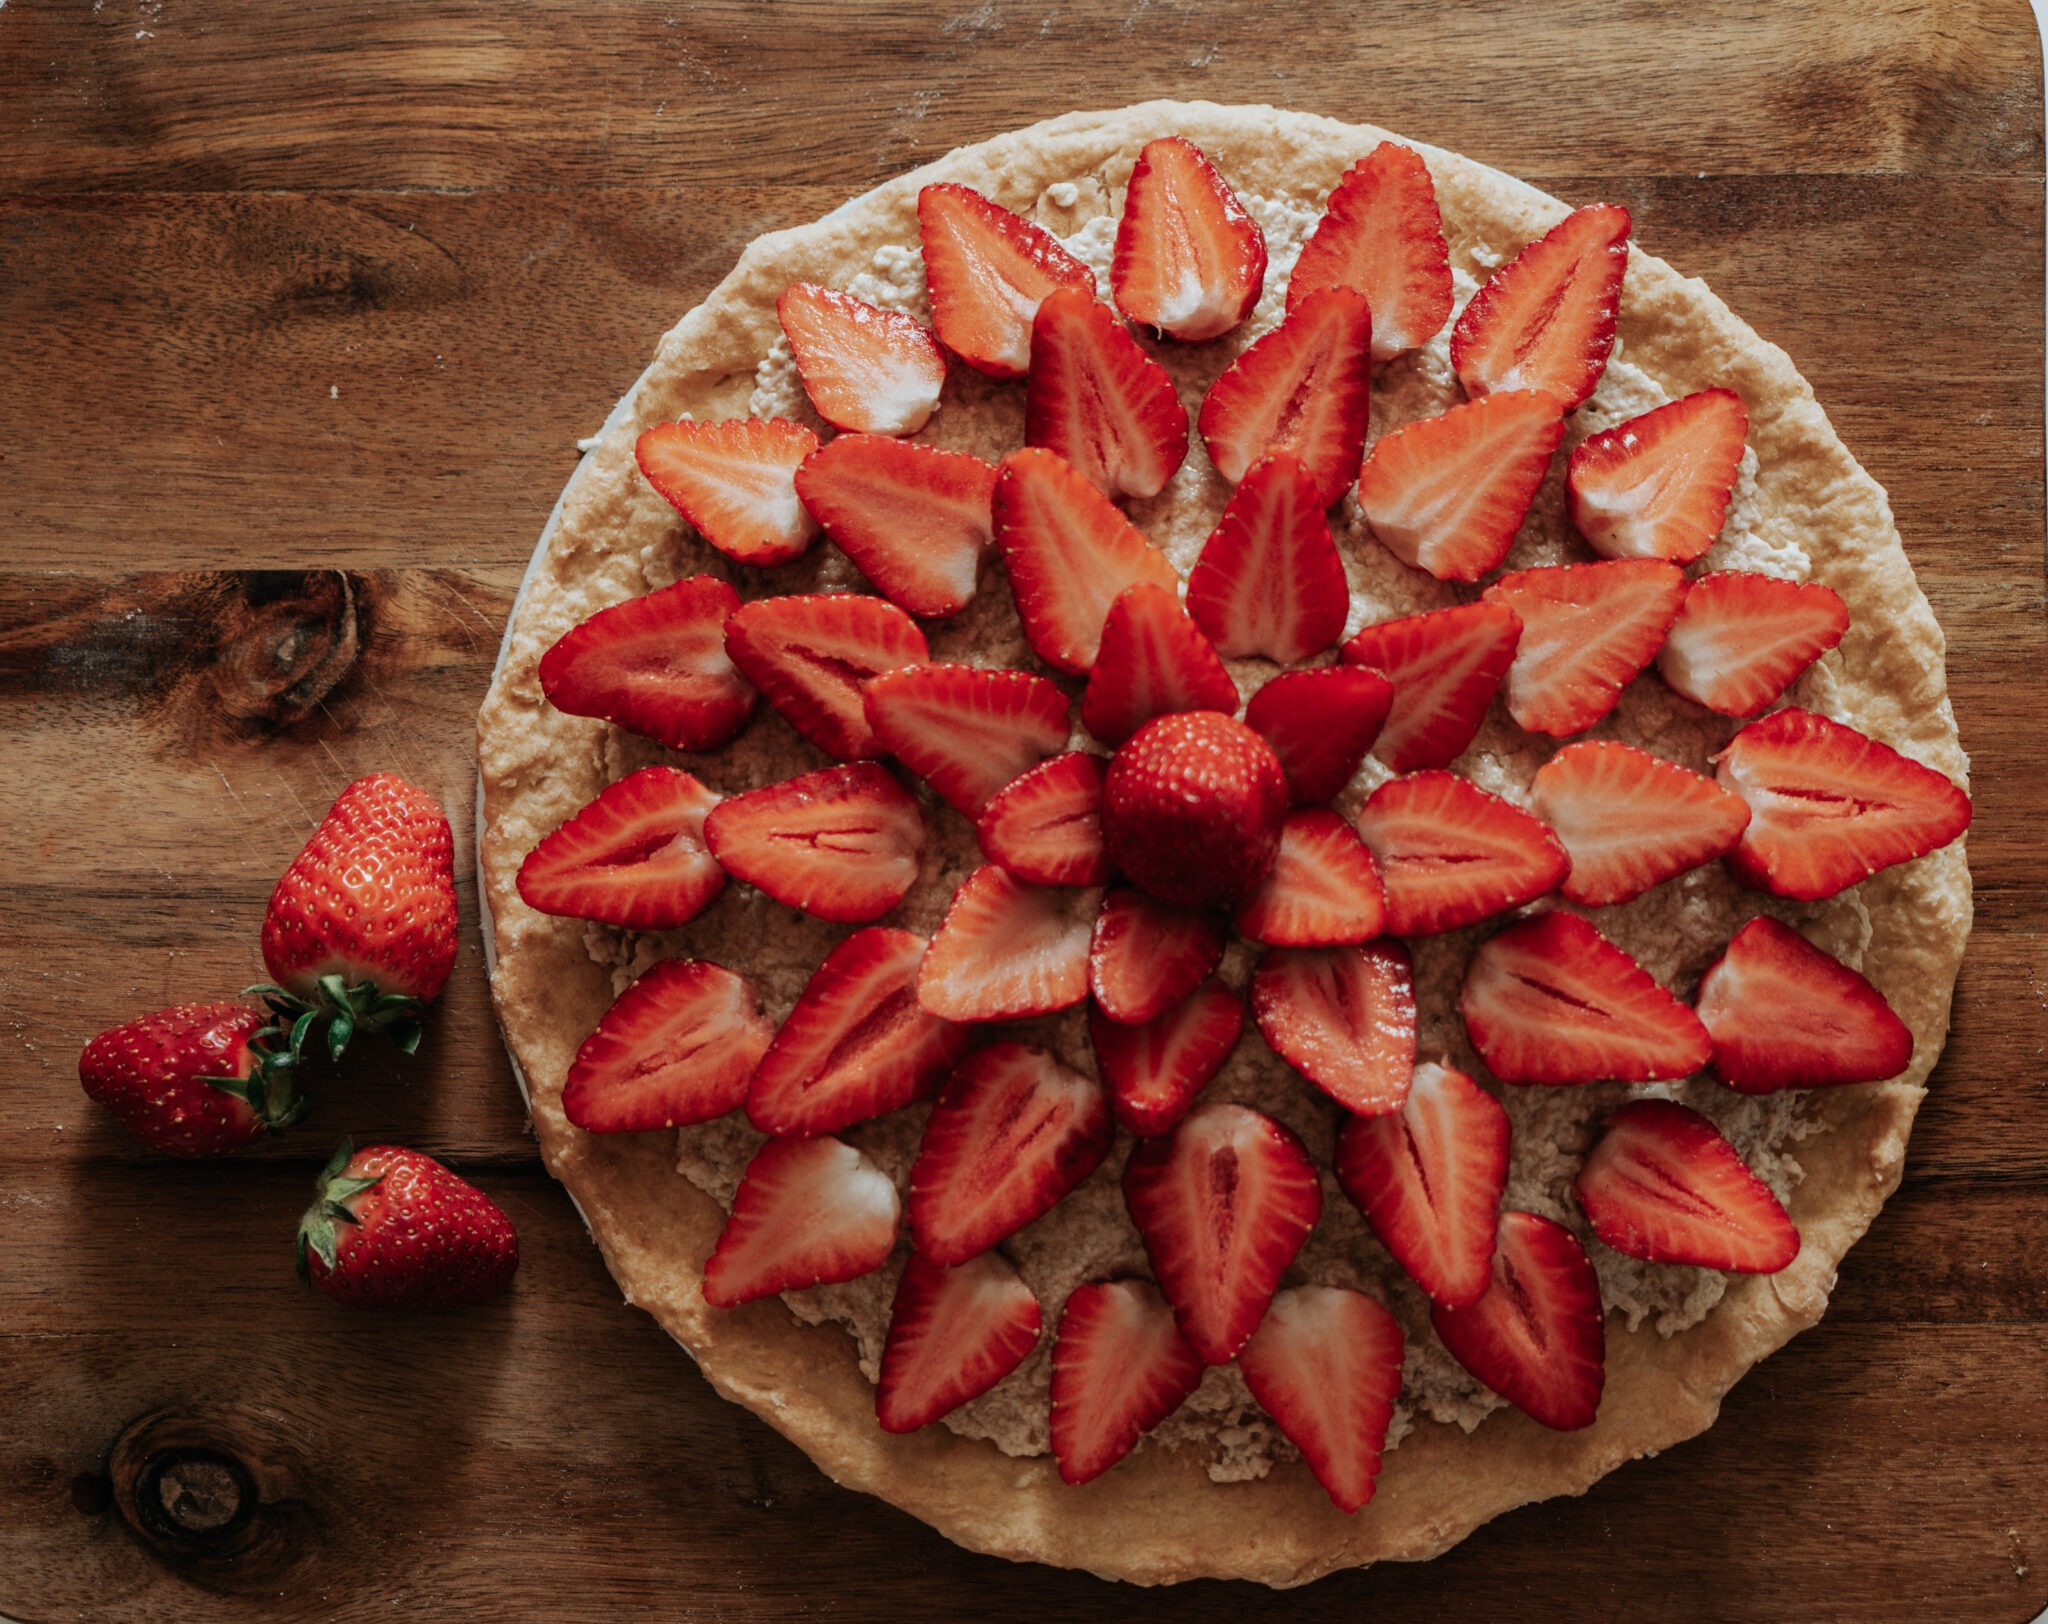 tarte aux fraises - strawberry pie - bodyandfly - food blogger recettes healthy